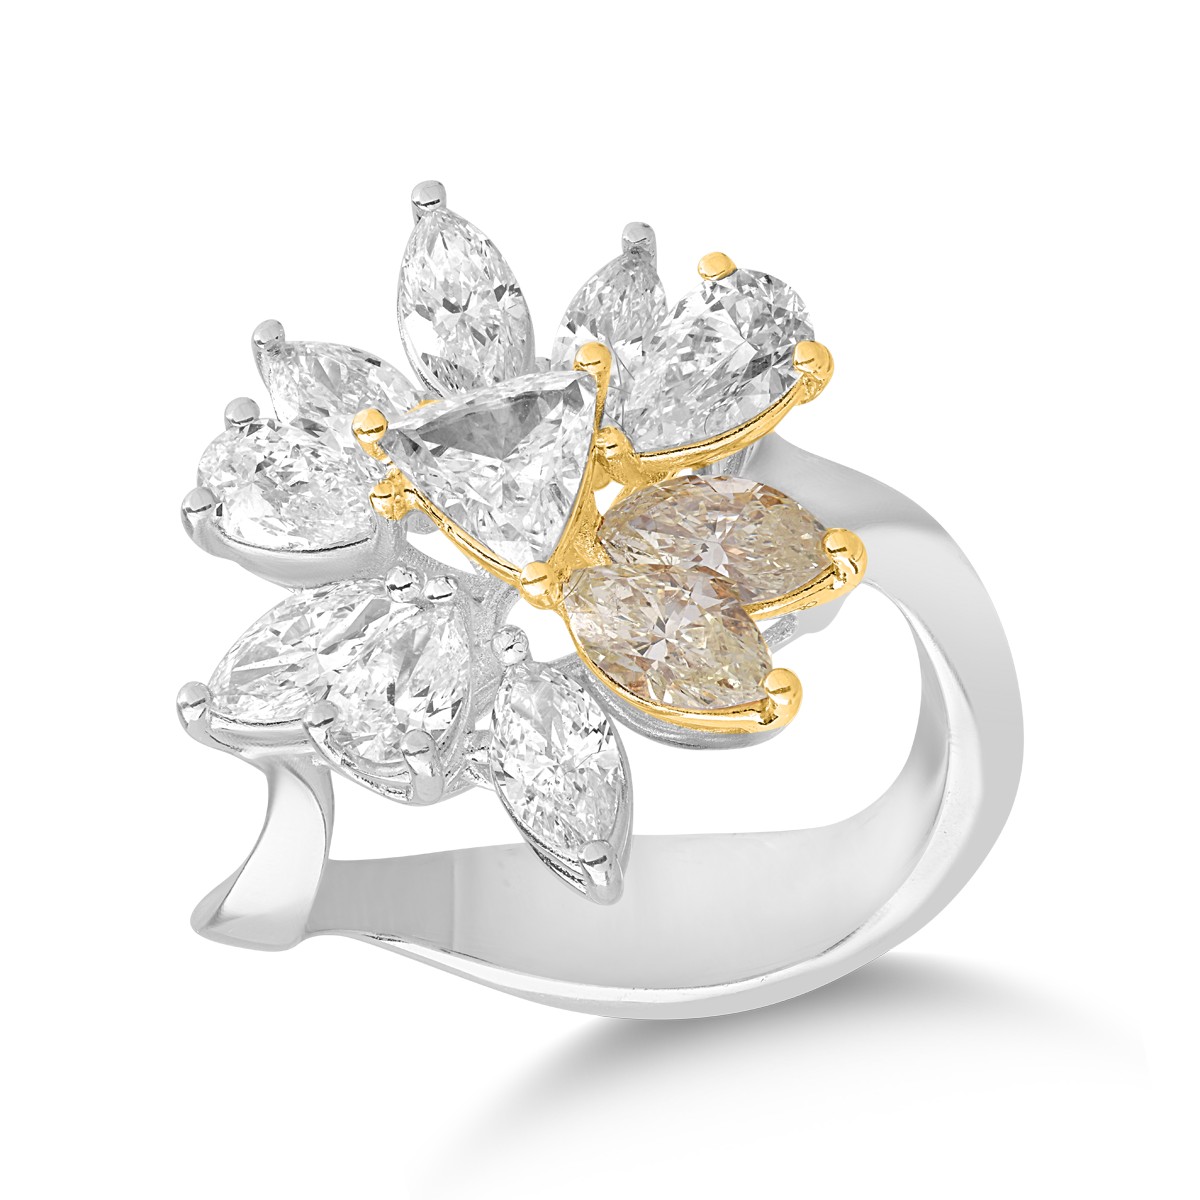 Inel din aur alb-galben de 18K cu diamante transparente de 1.05ct si diamante galbene de 0.58ct